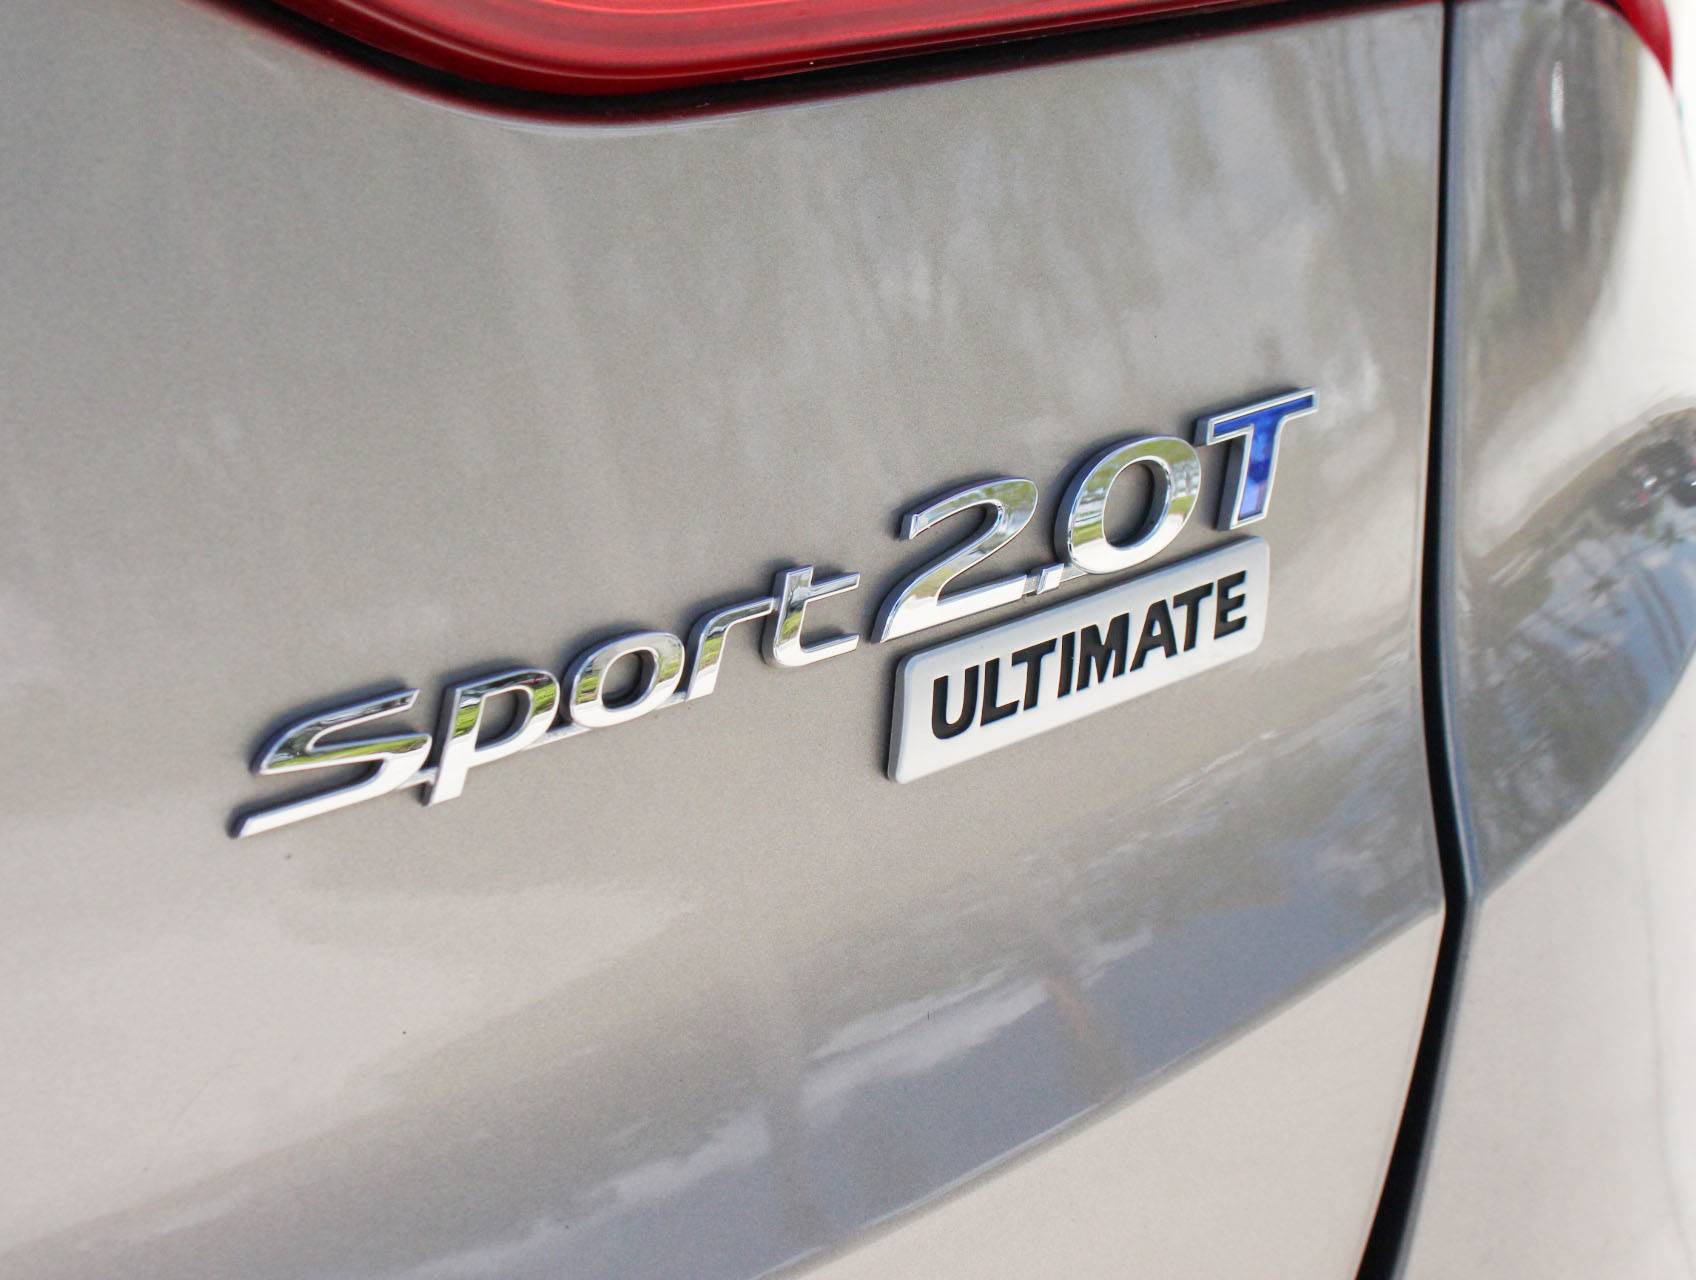 Florida Fine Cars - Used HYUNDAI Santa Fe Sport 2015 MIAMI Ultimate 2.0t